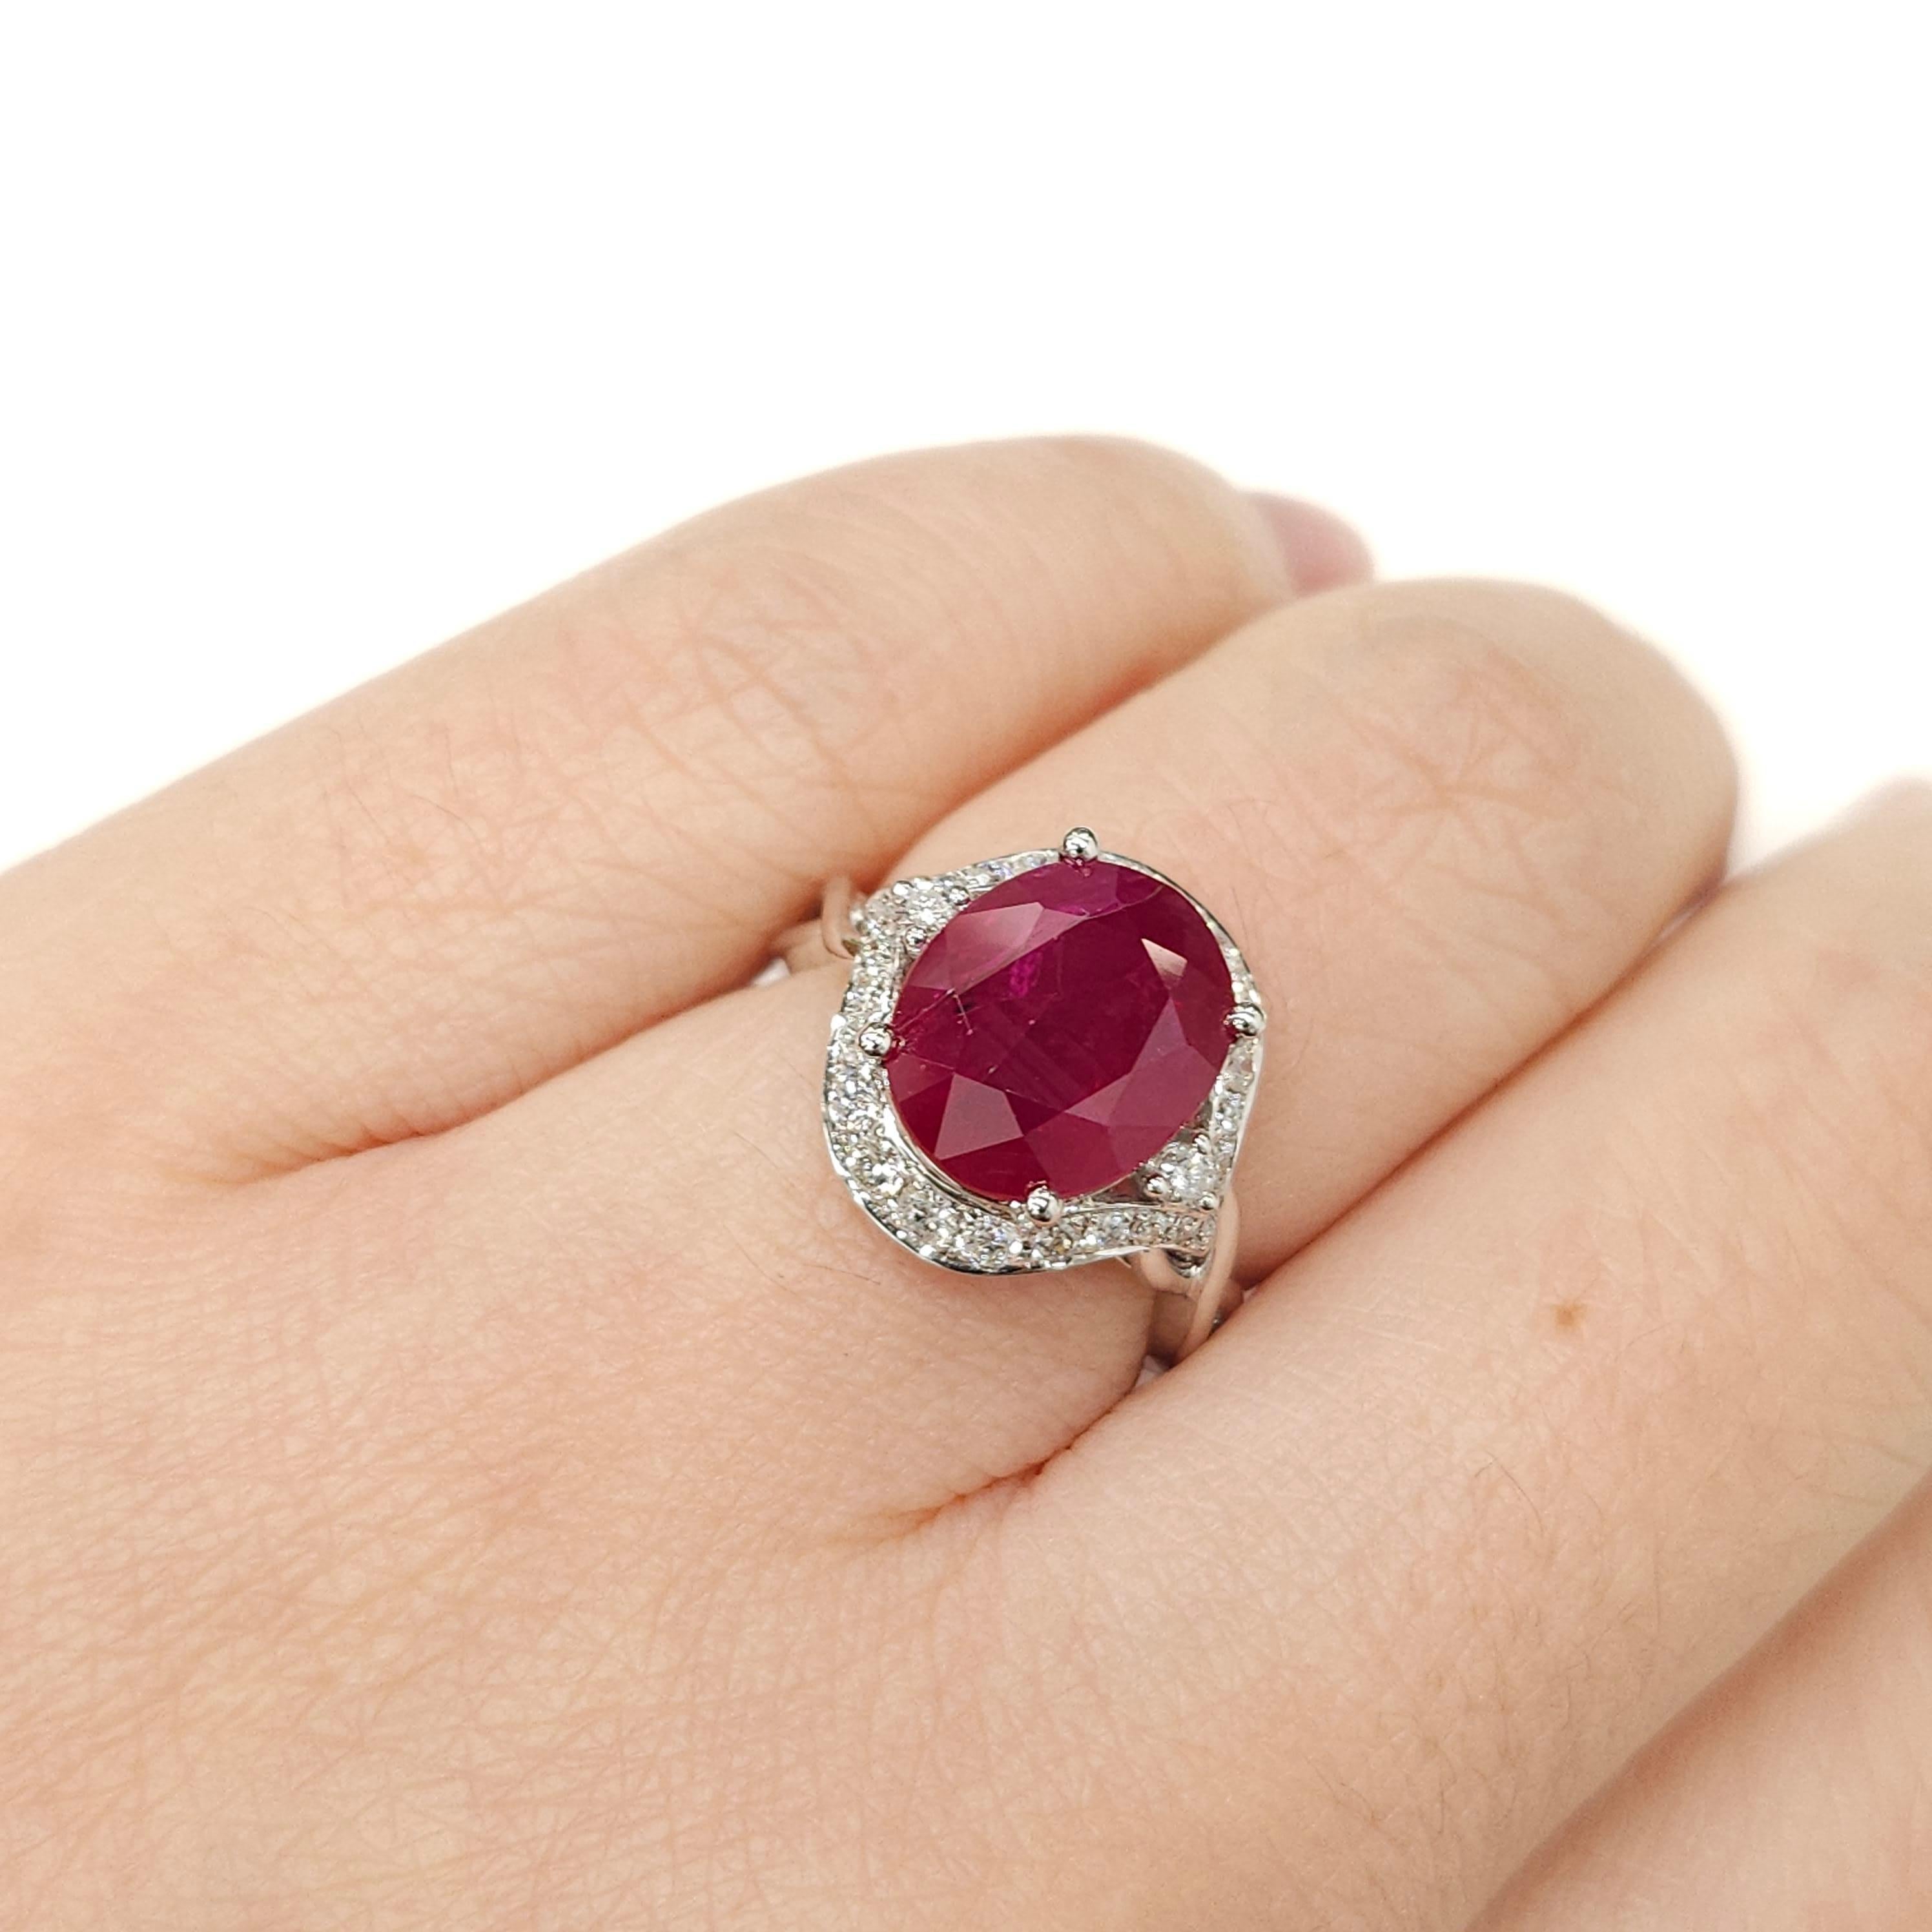 Modern IGI Certified 4.59 Carat Burma Ruby & Diamond Ring in 18K White Gold For Sale